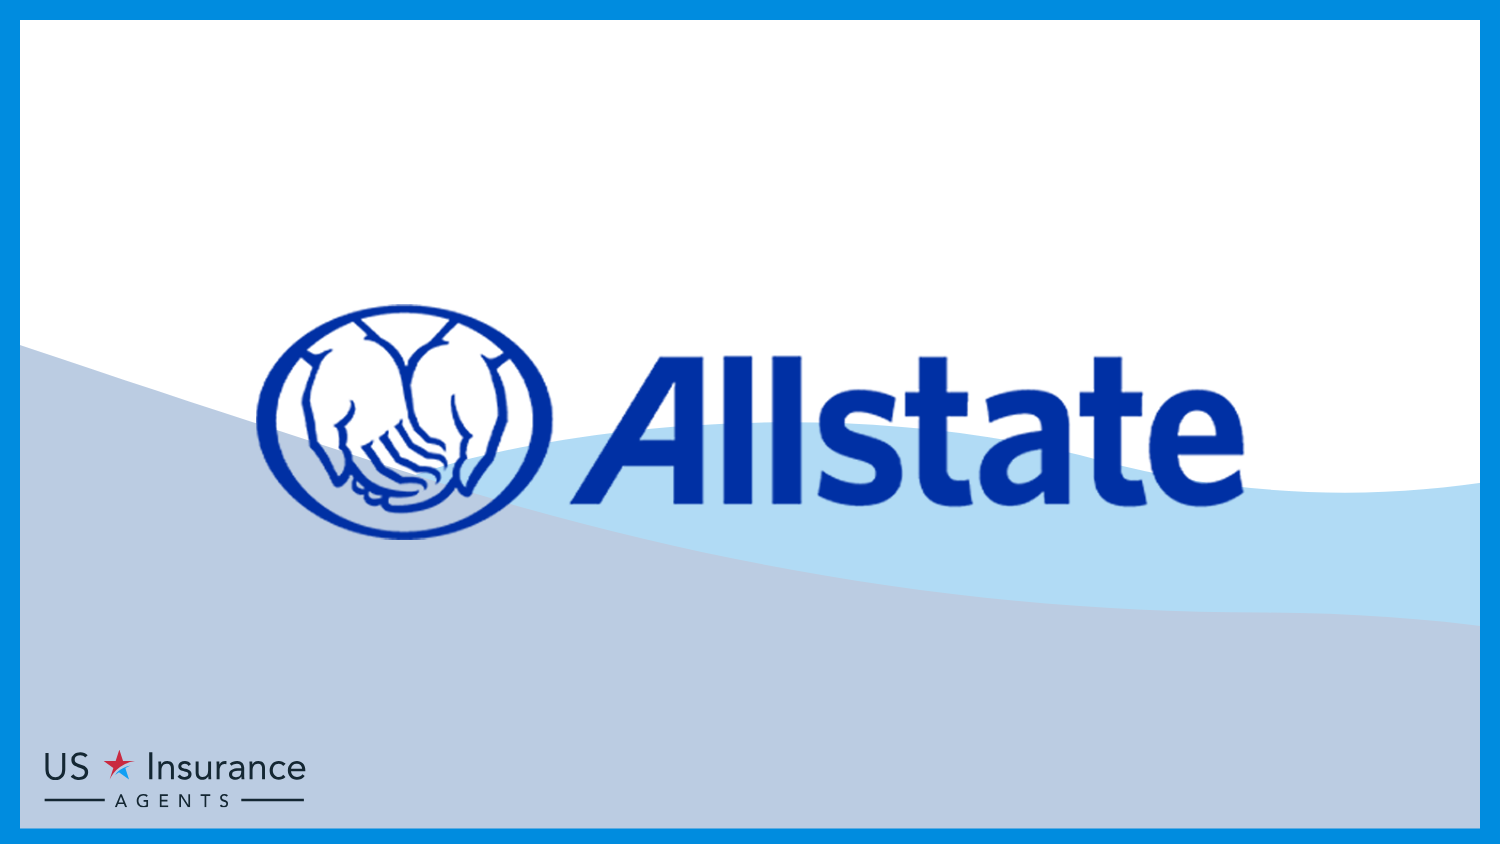 Allstate: Best Business Insurance for Insurance Agents